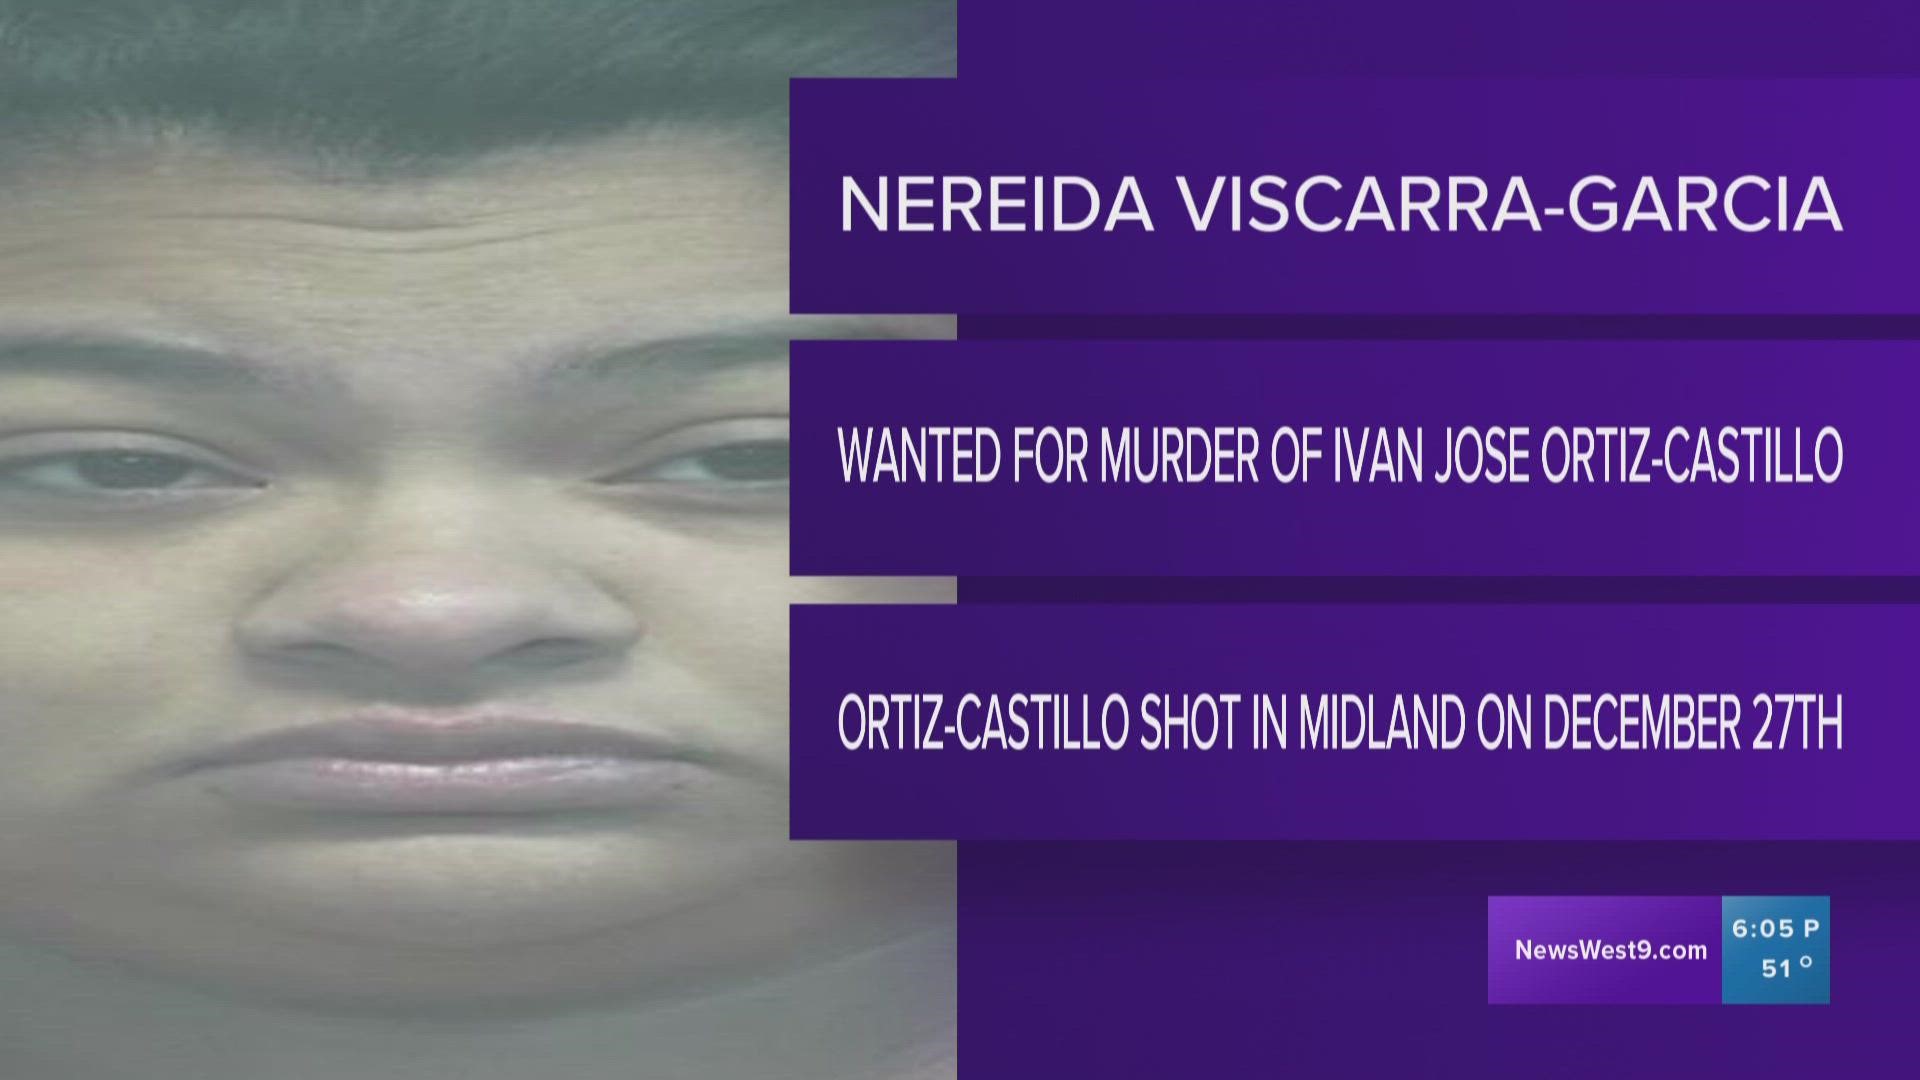 Nereida Viscarra-Garcia was served the warrant for her part in the death of Ivan Jose Ortiz-Castillo.